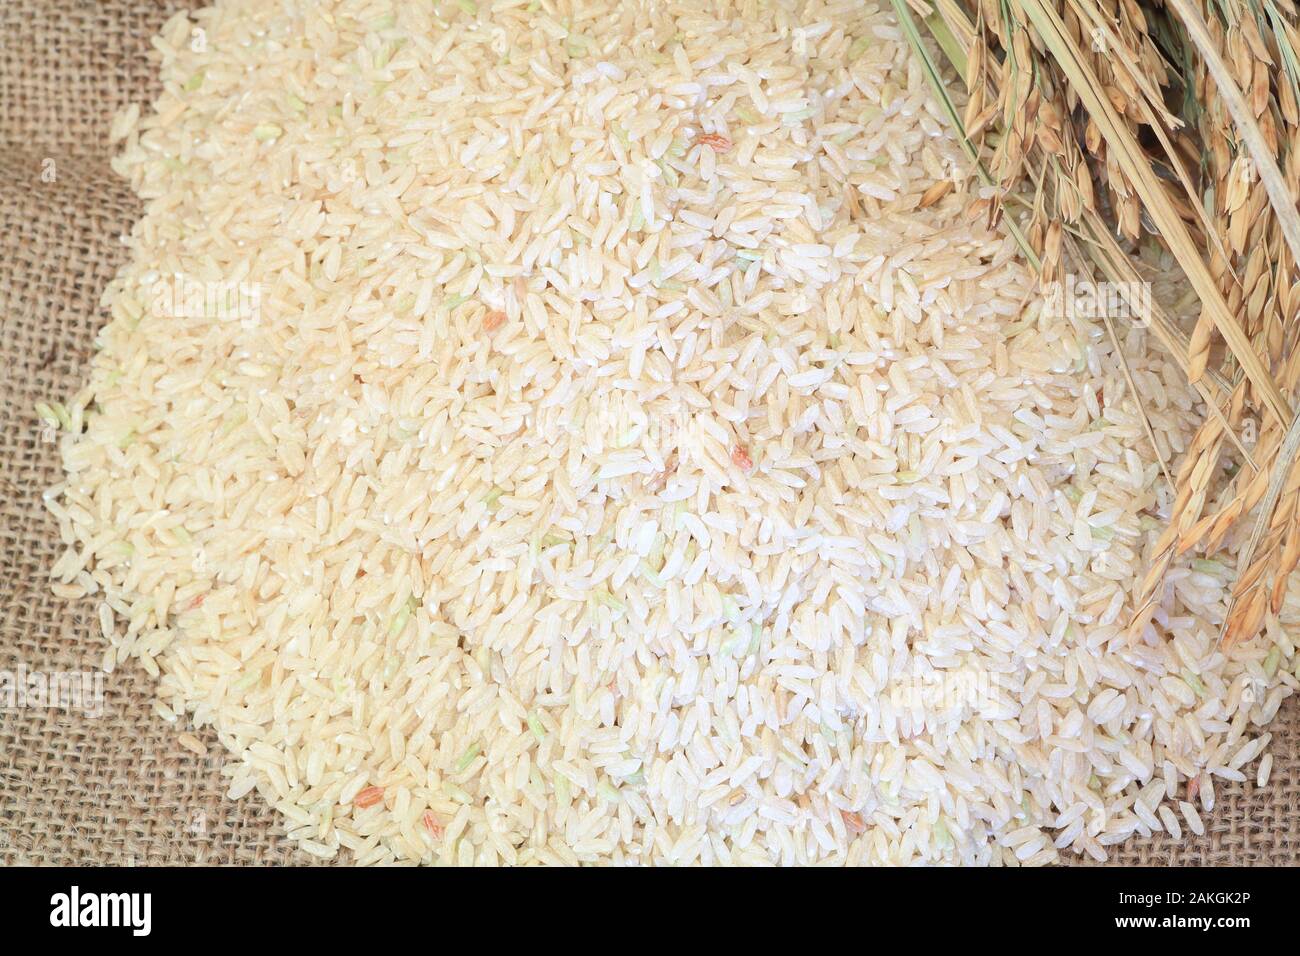 France, Gard, Petite Camargue, Saint-Gilles, Canard des Rizieres, organic Camargue rice (semi-complete long organic rice) Stock Photo